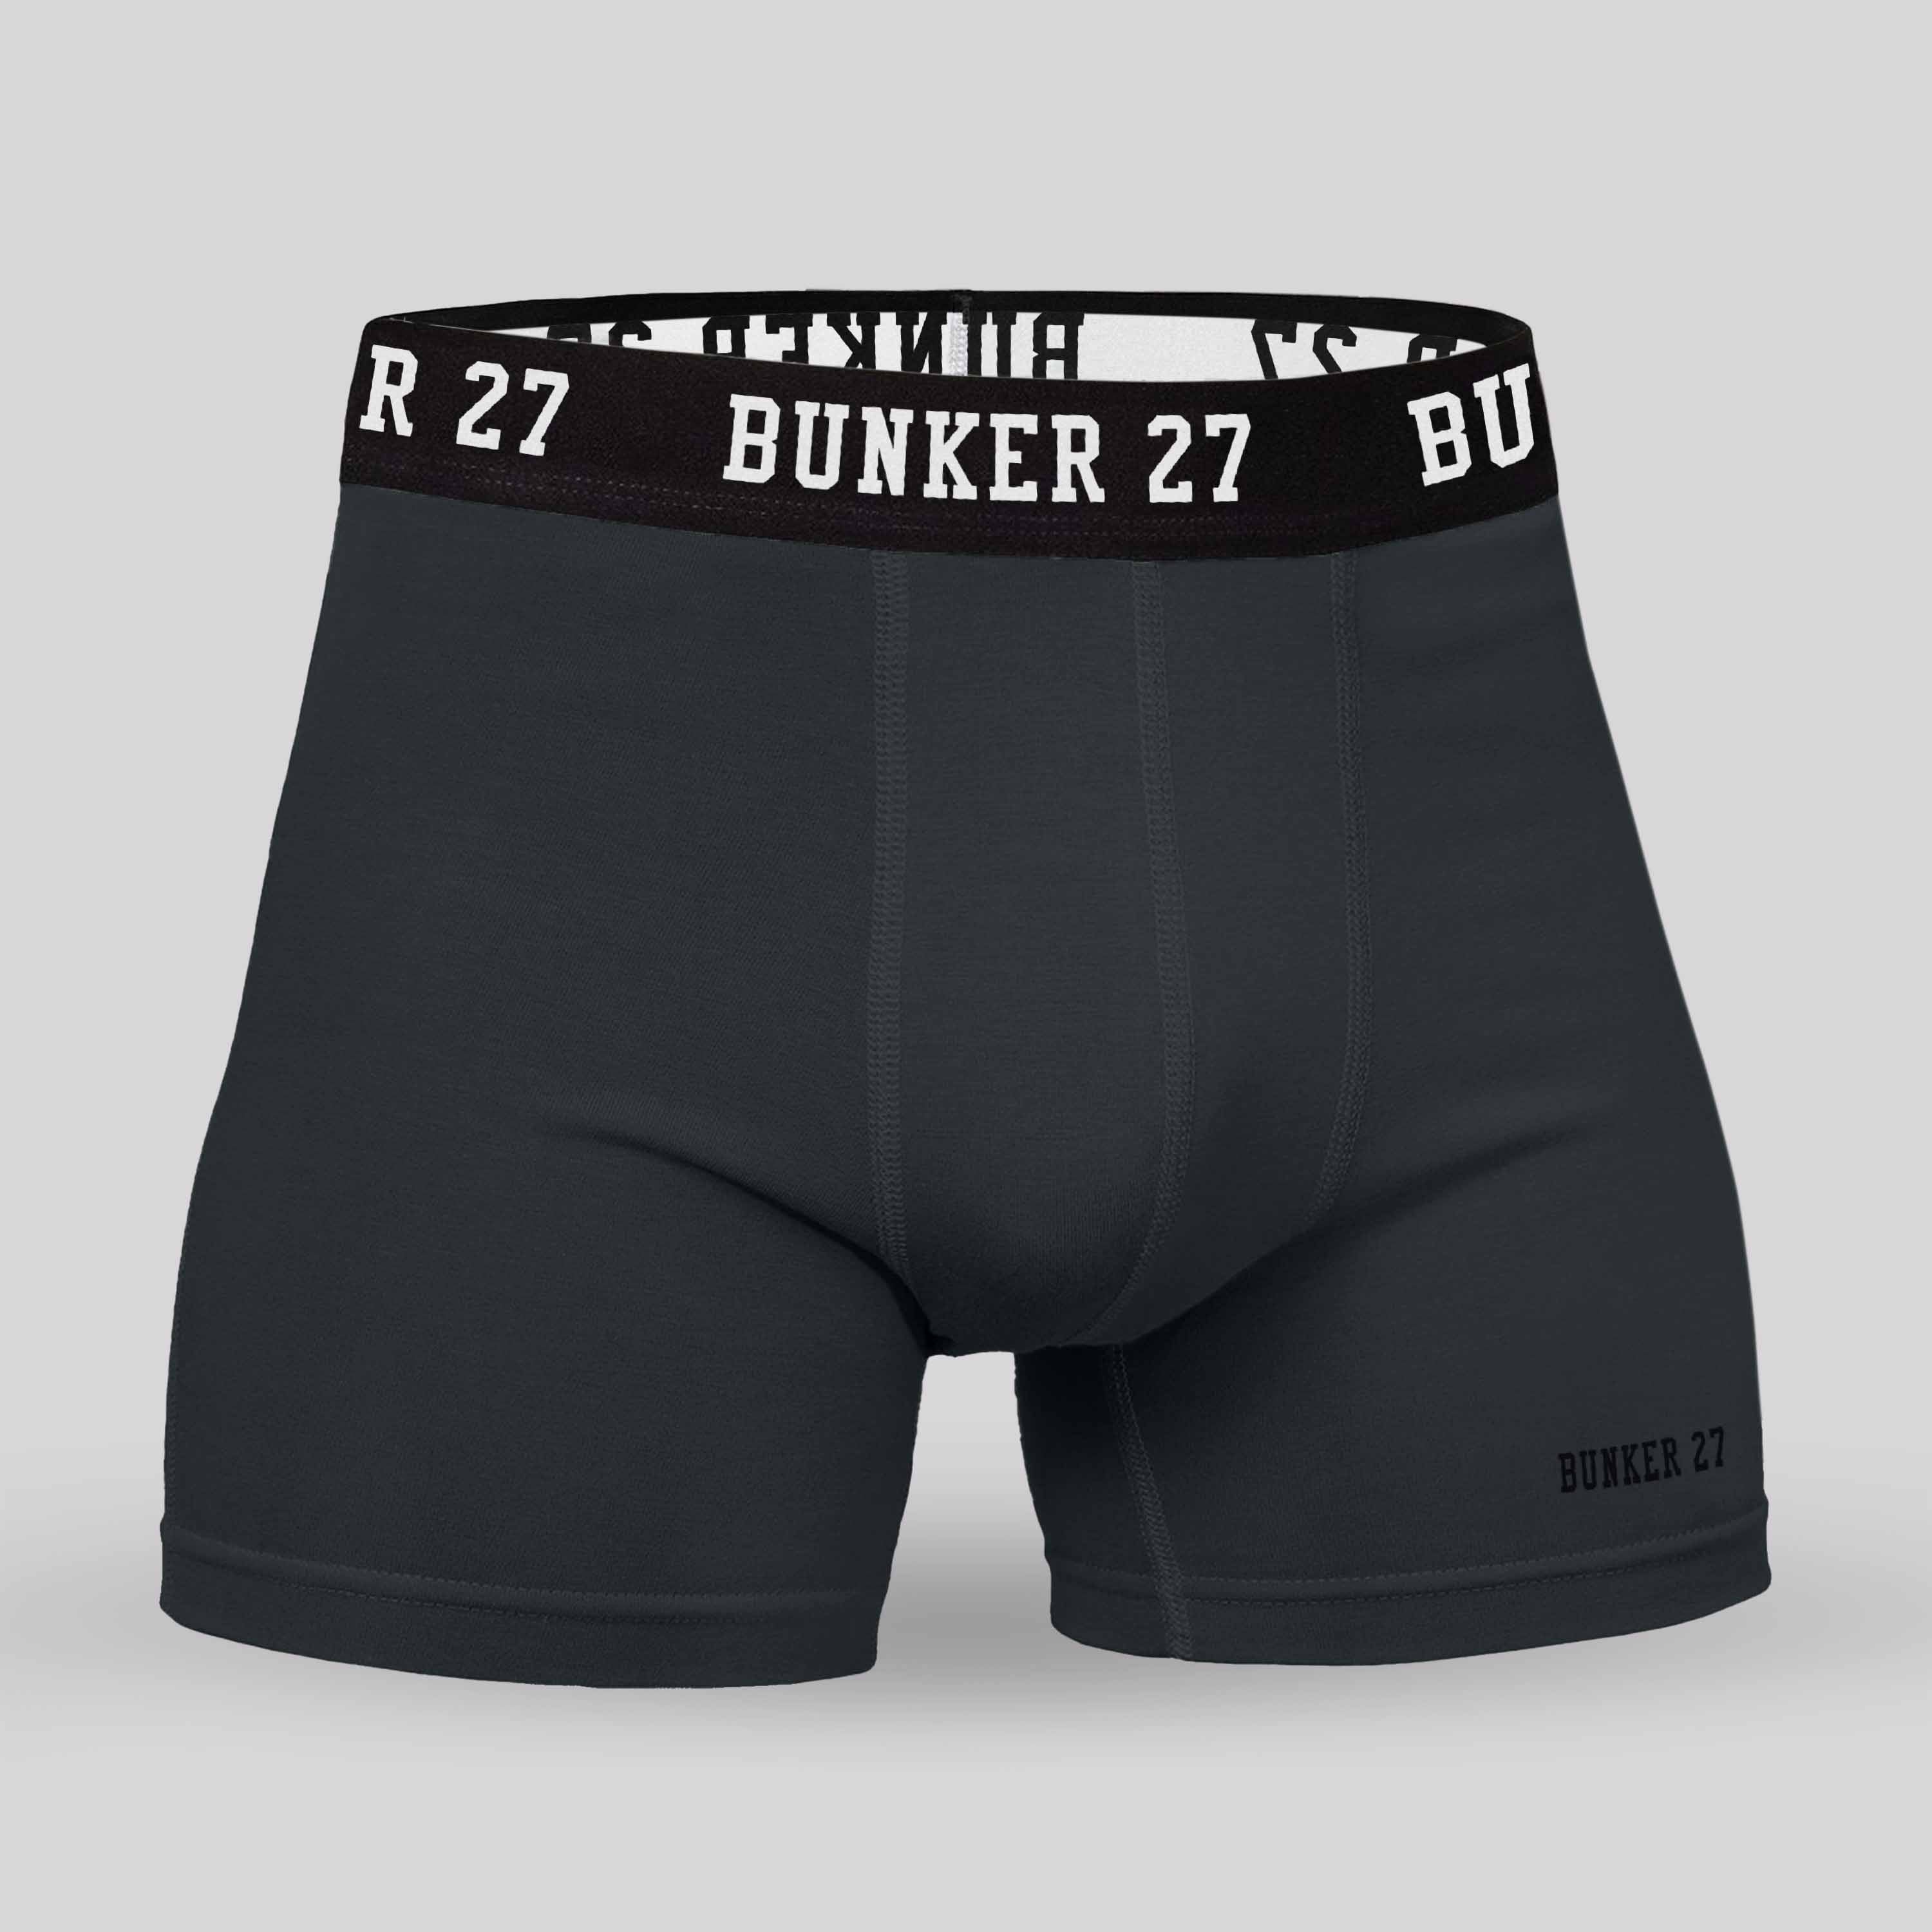 Mens - BUNKER 3 Boxer Pack 27 Brief Underwear